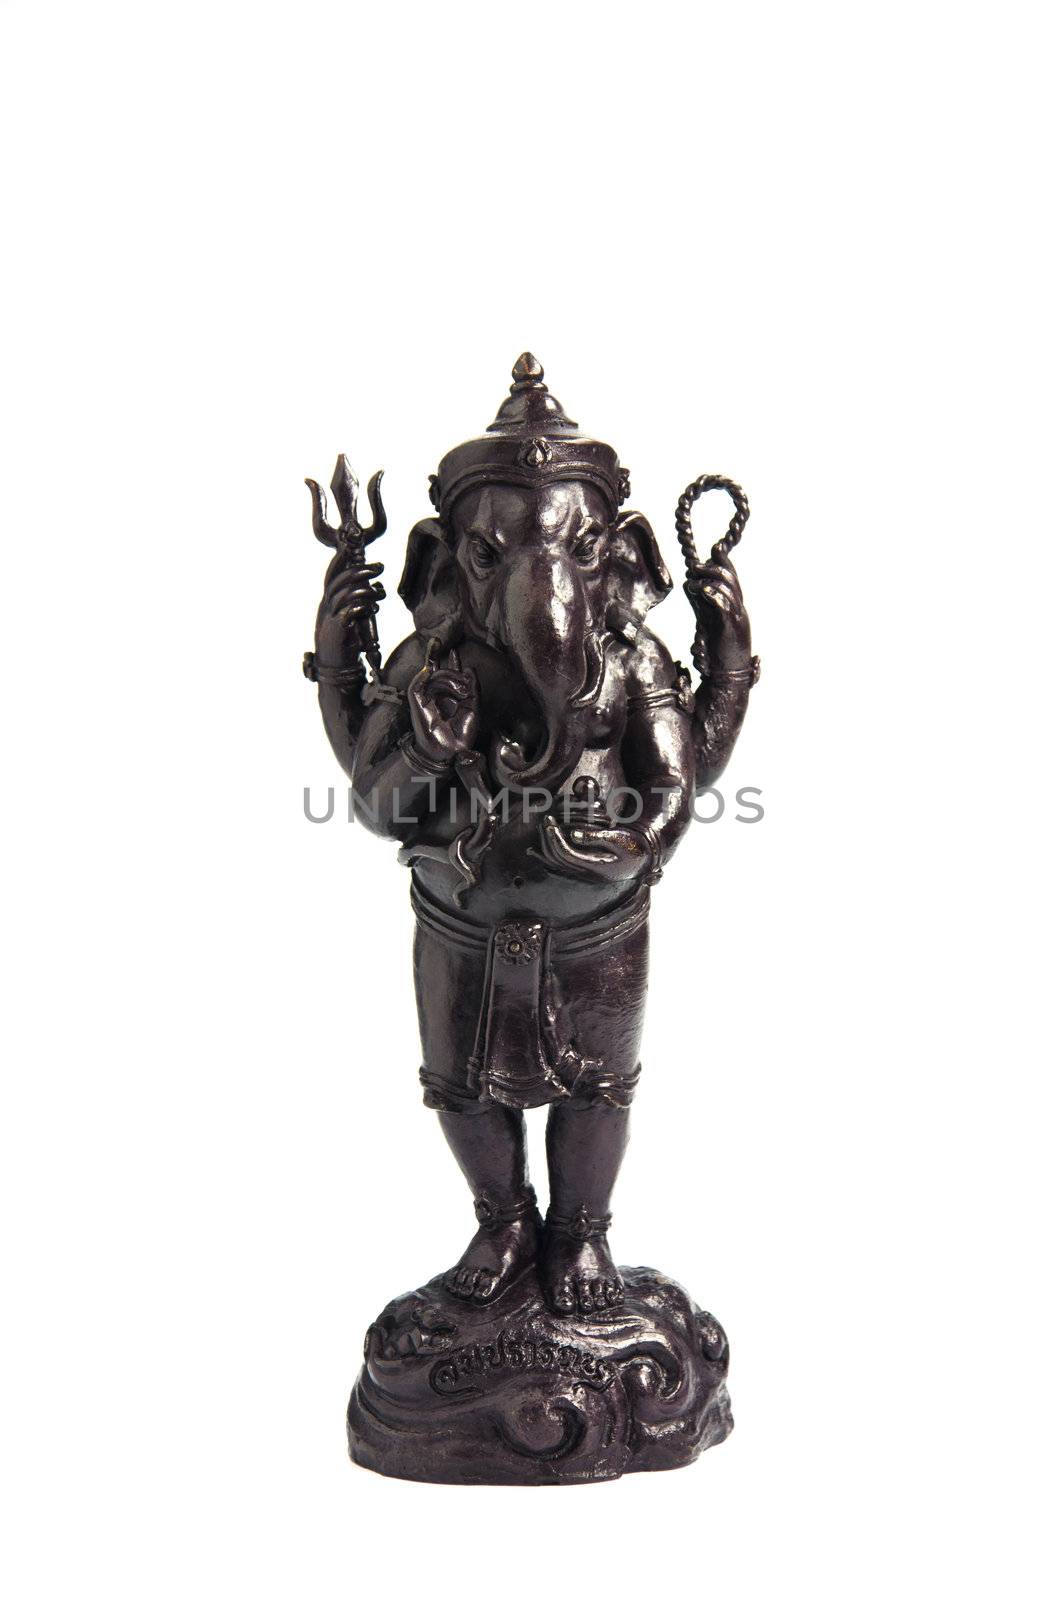 Ganesh on white background by chatchai